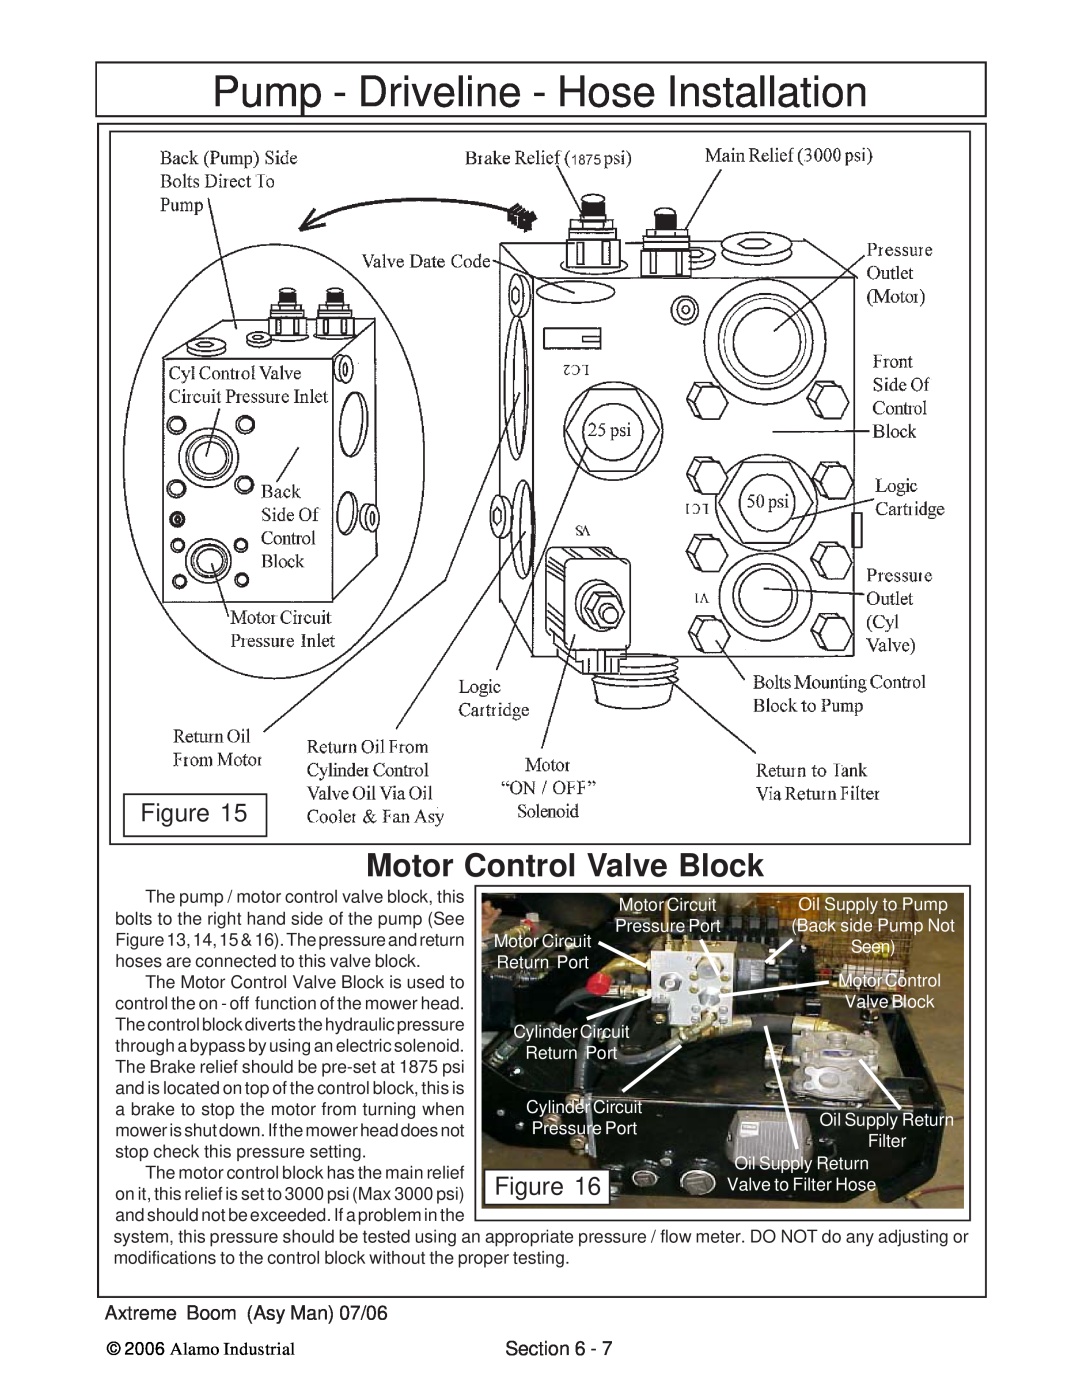 Alamo 02984405 instruction manual Motor Control Valve Block, Pump - Driveline - Hose Installation 